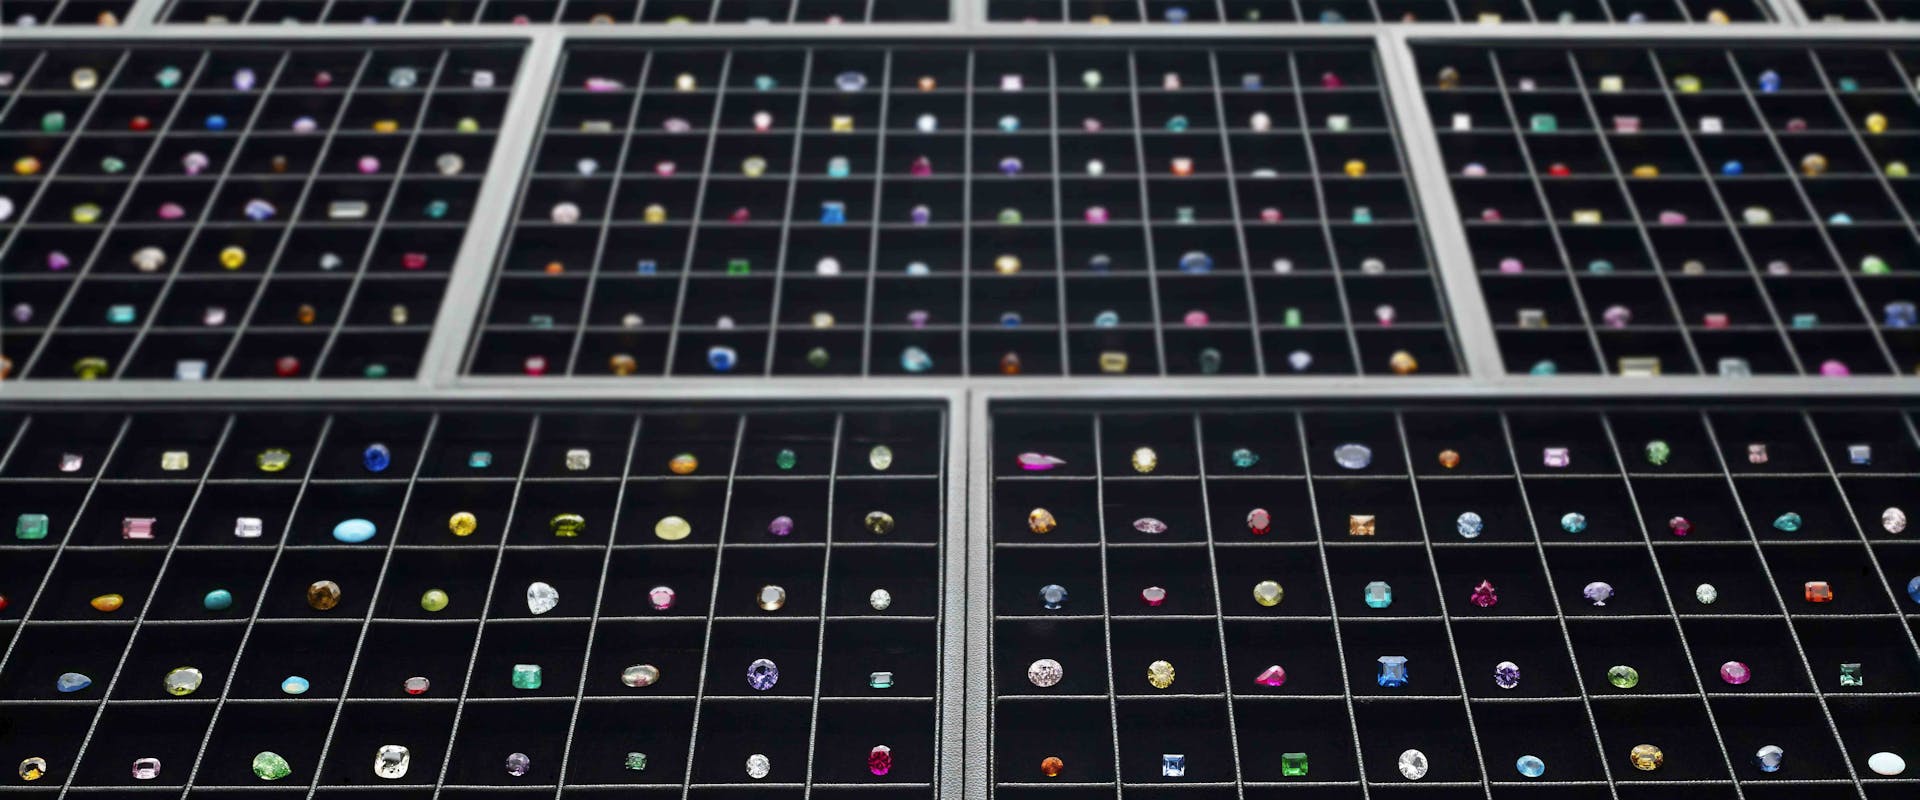 Gems in a black box